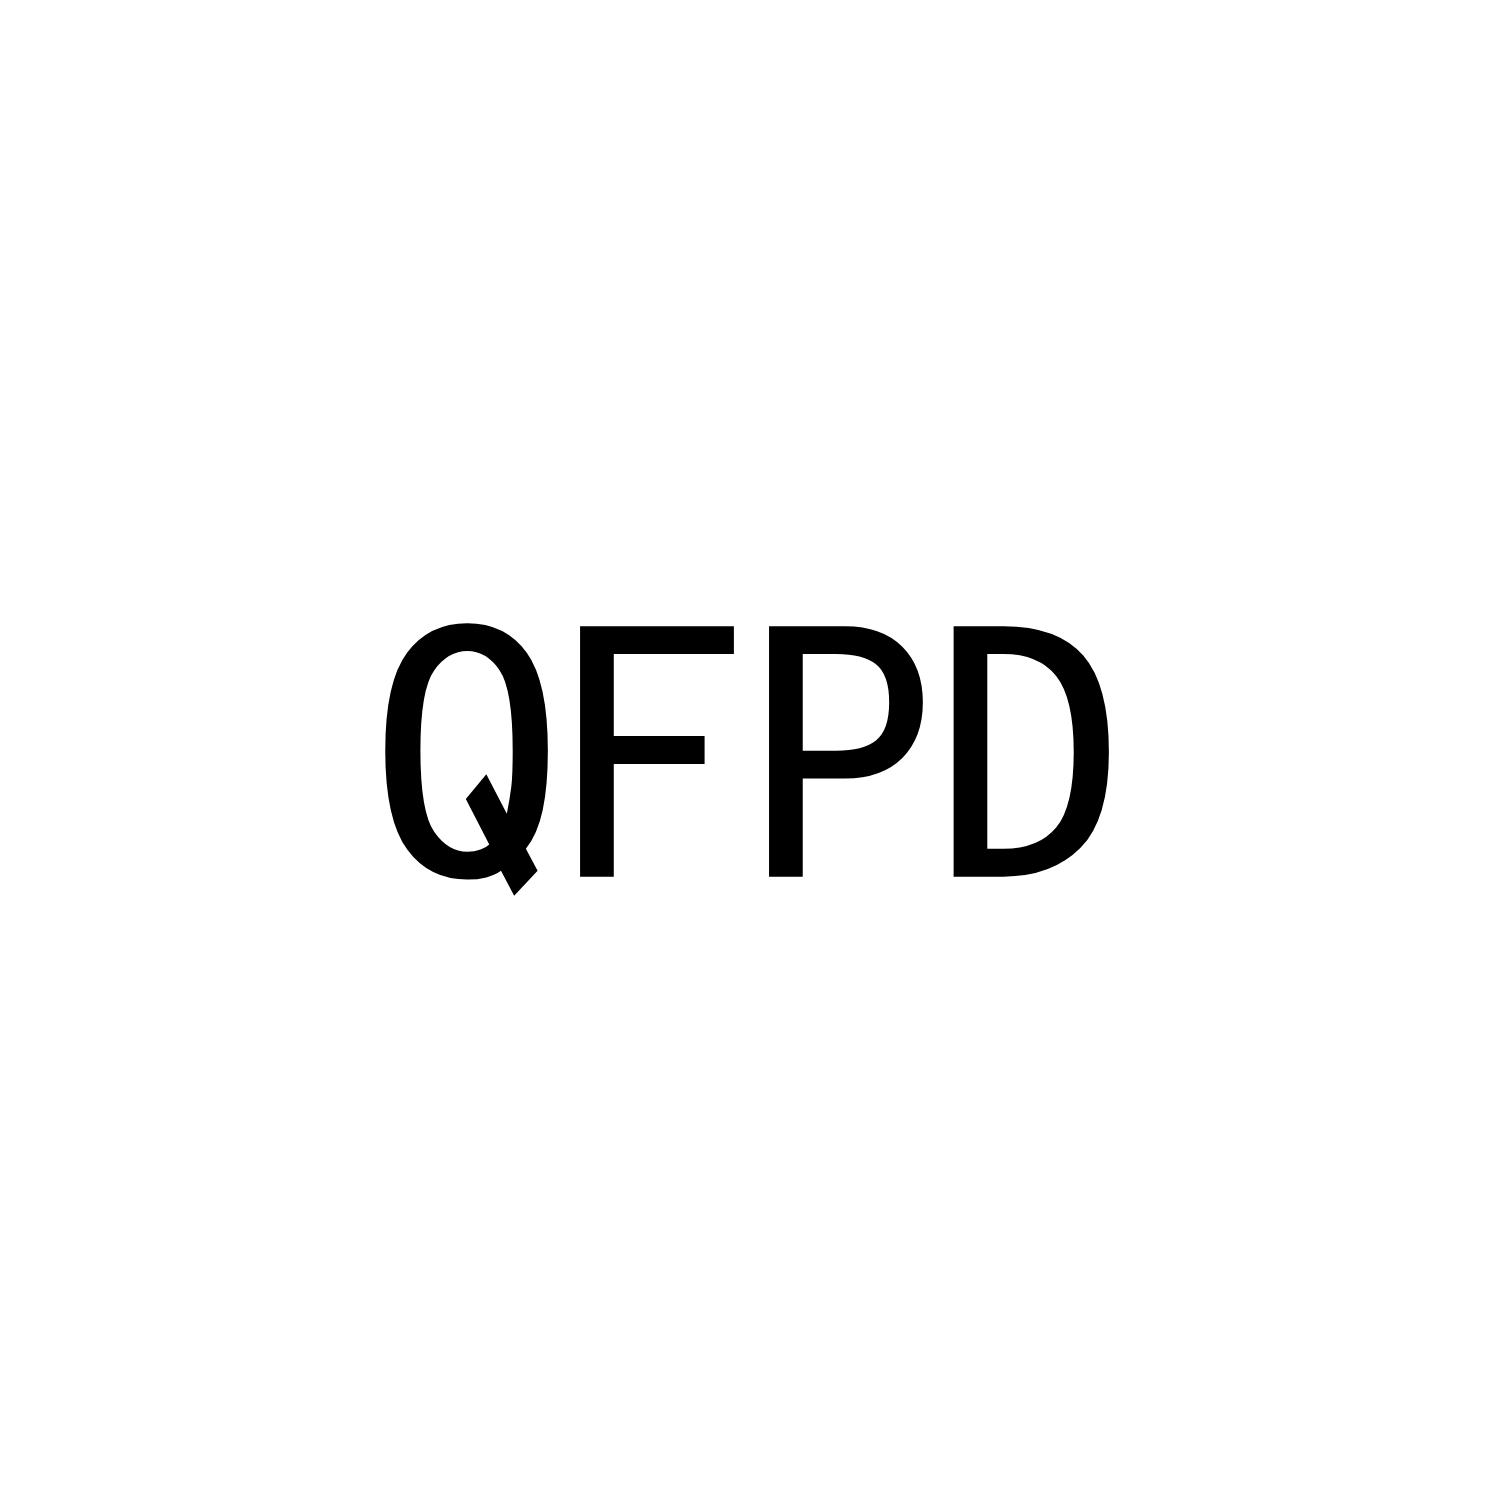 QFPD